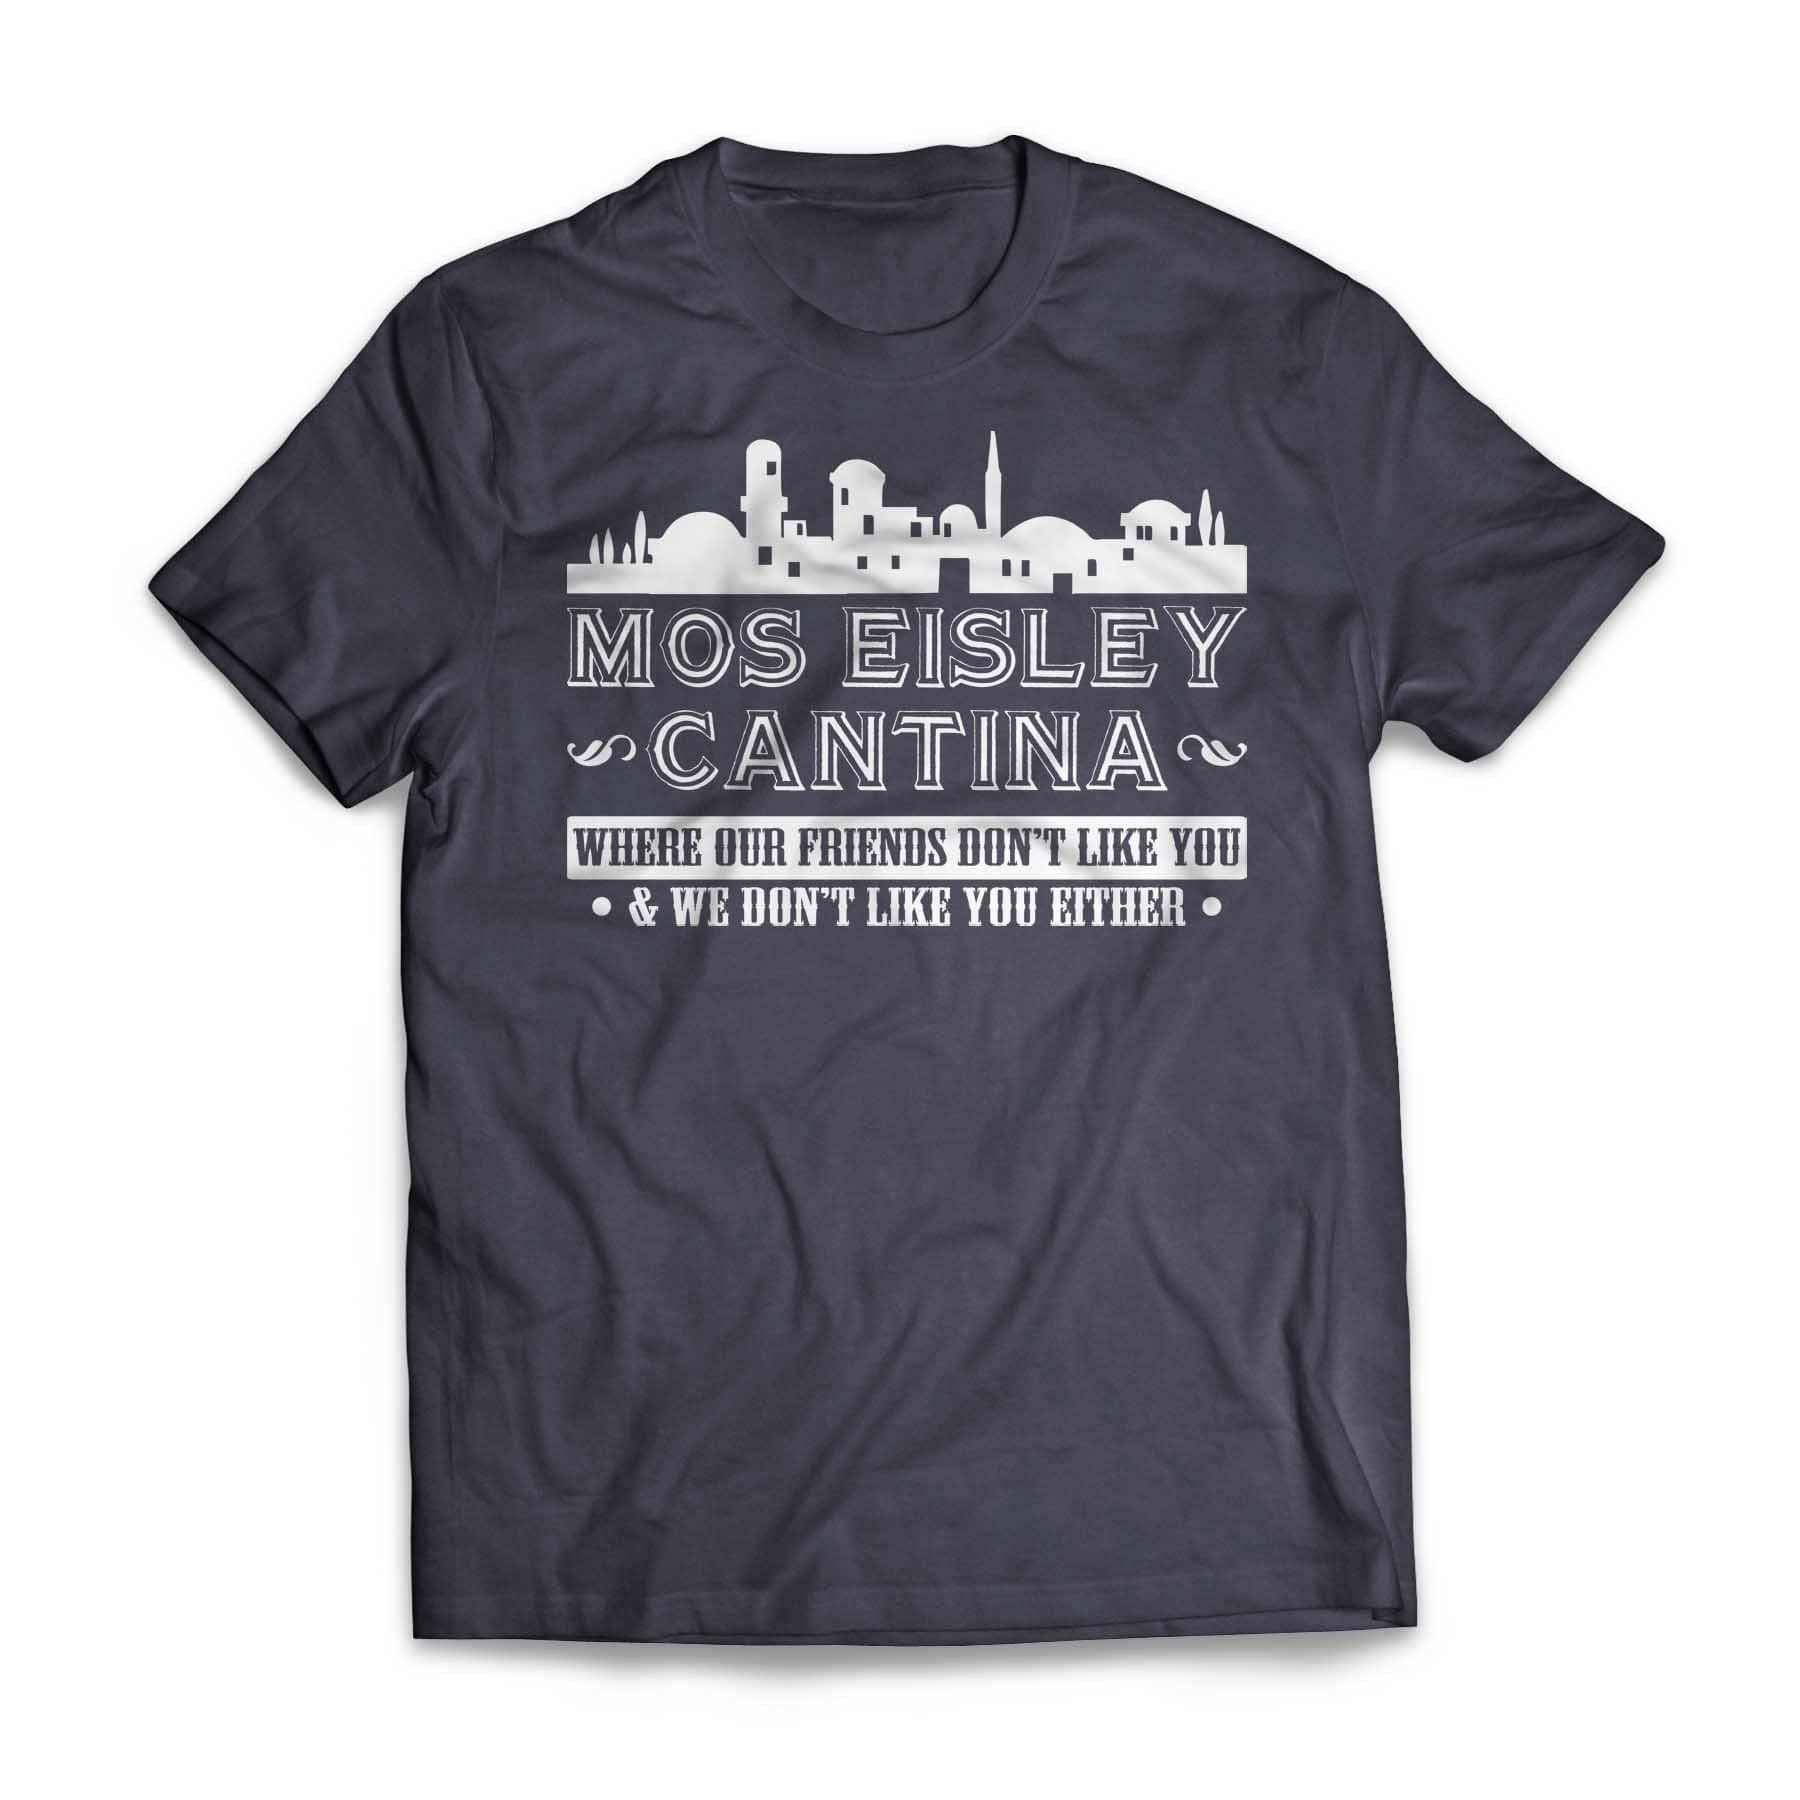 mos eisley shirt